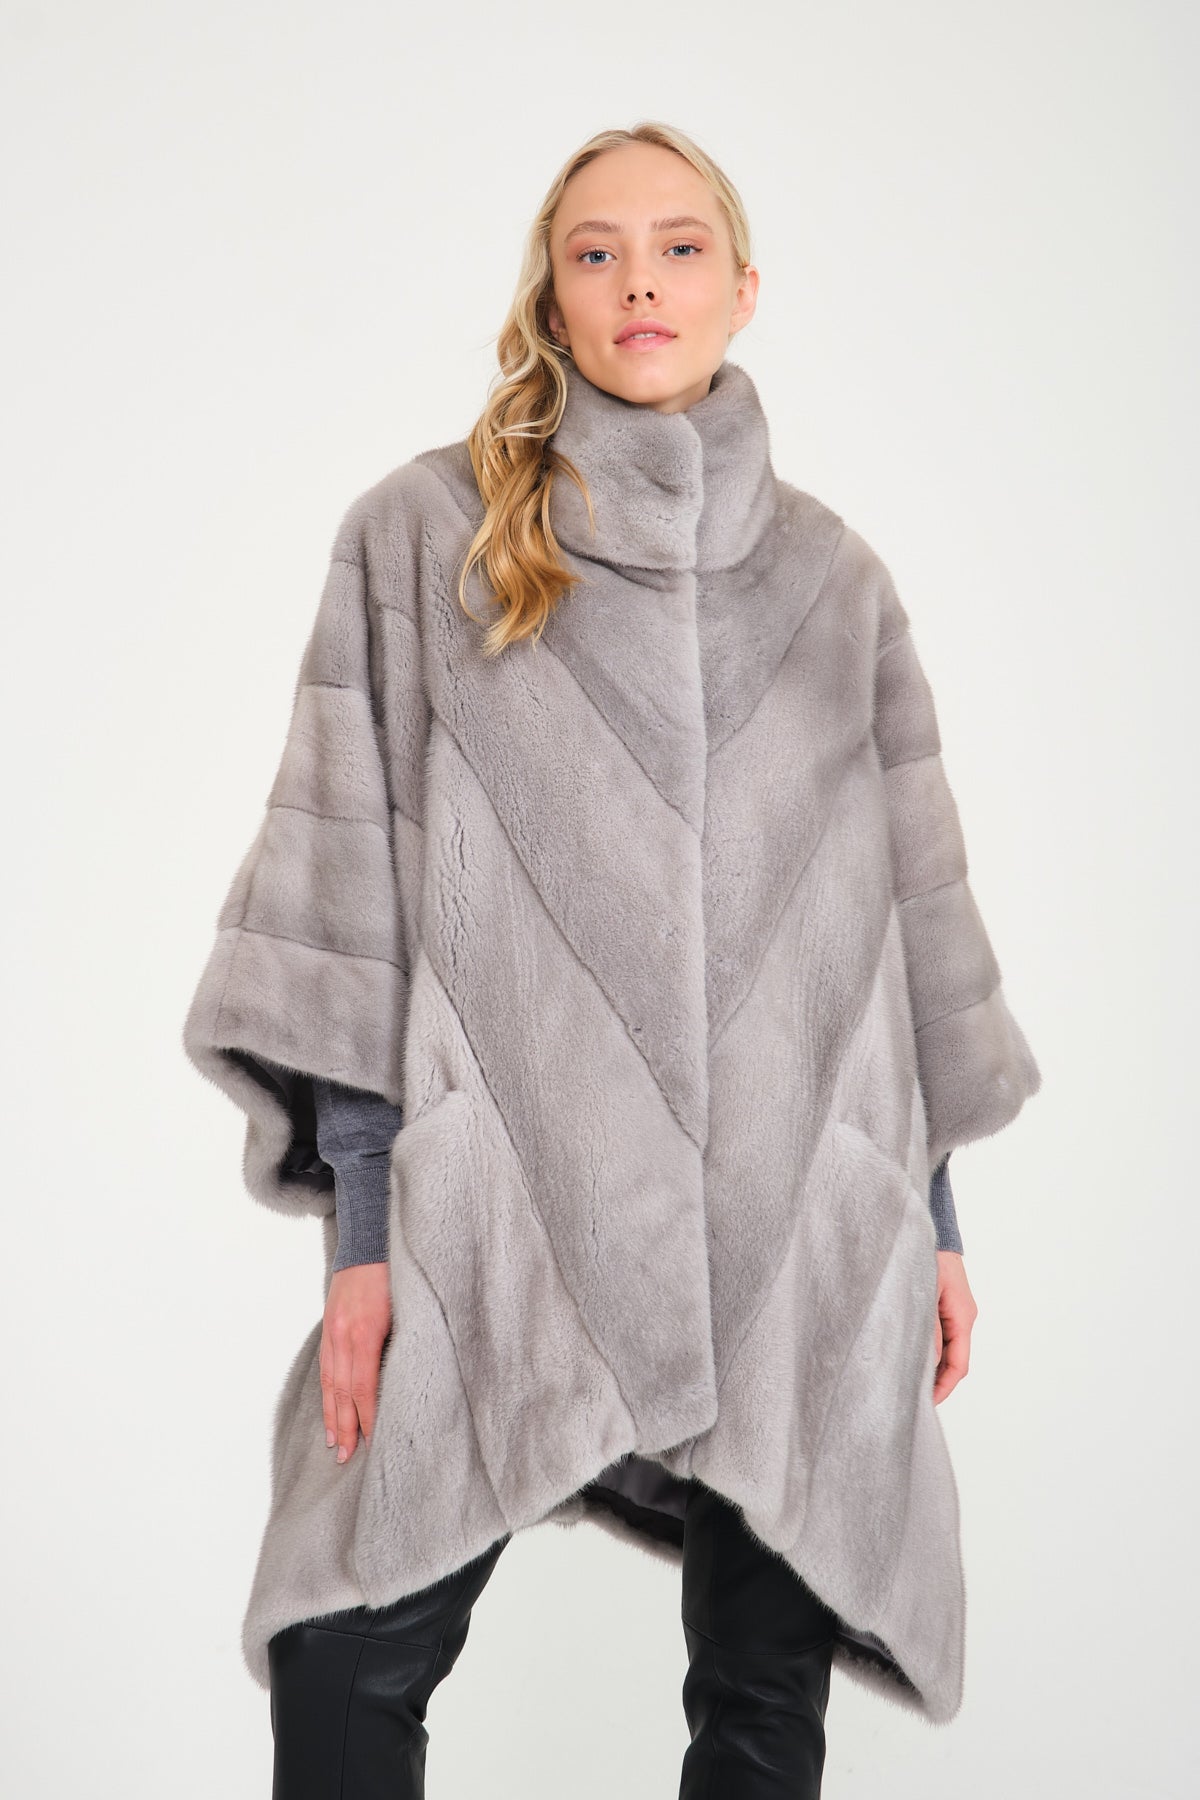 Mink fur sweater -  - online web store of women's fur clothes  from Ukraine